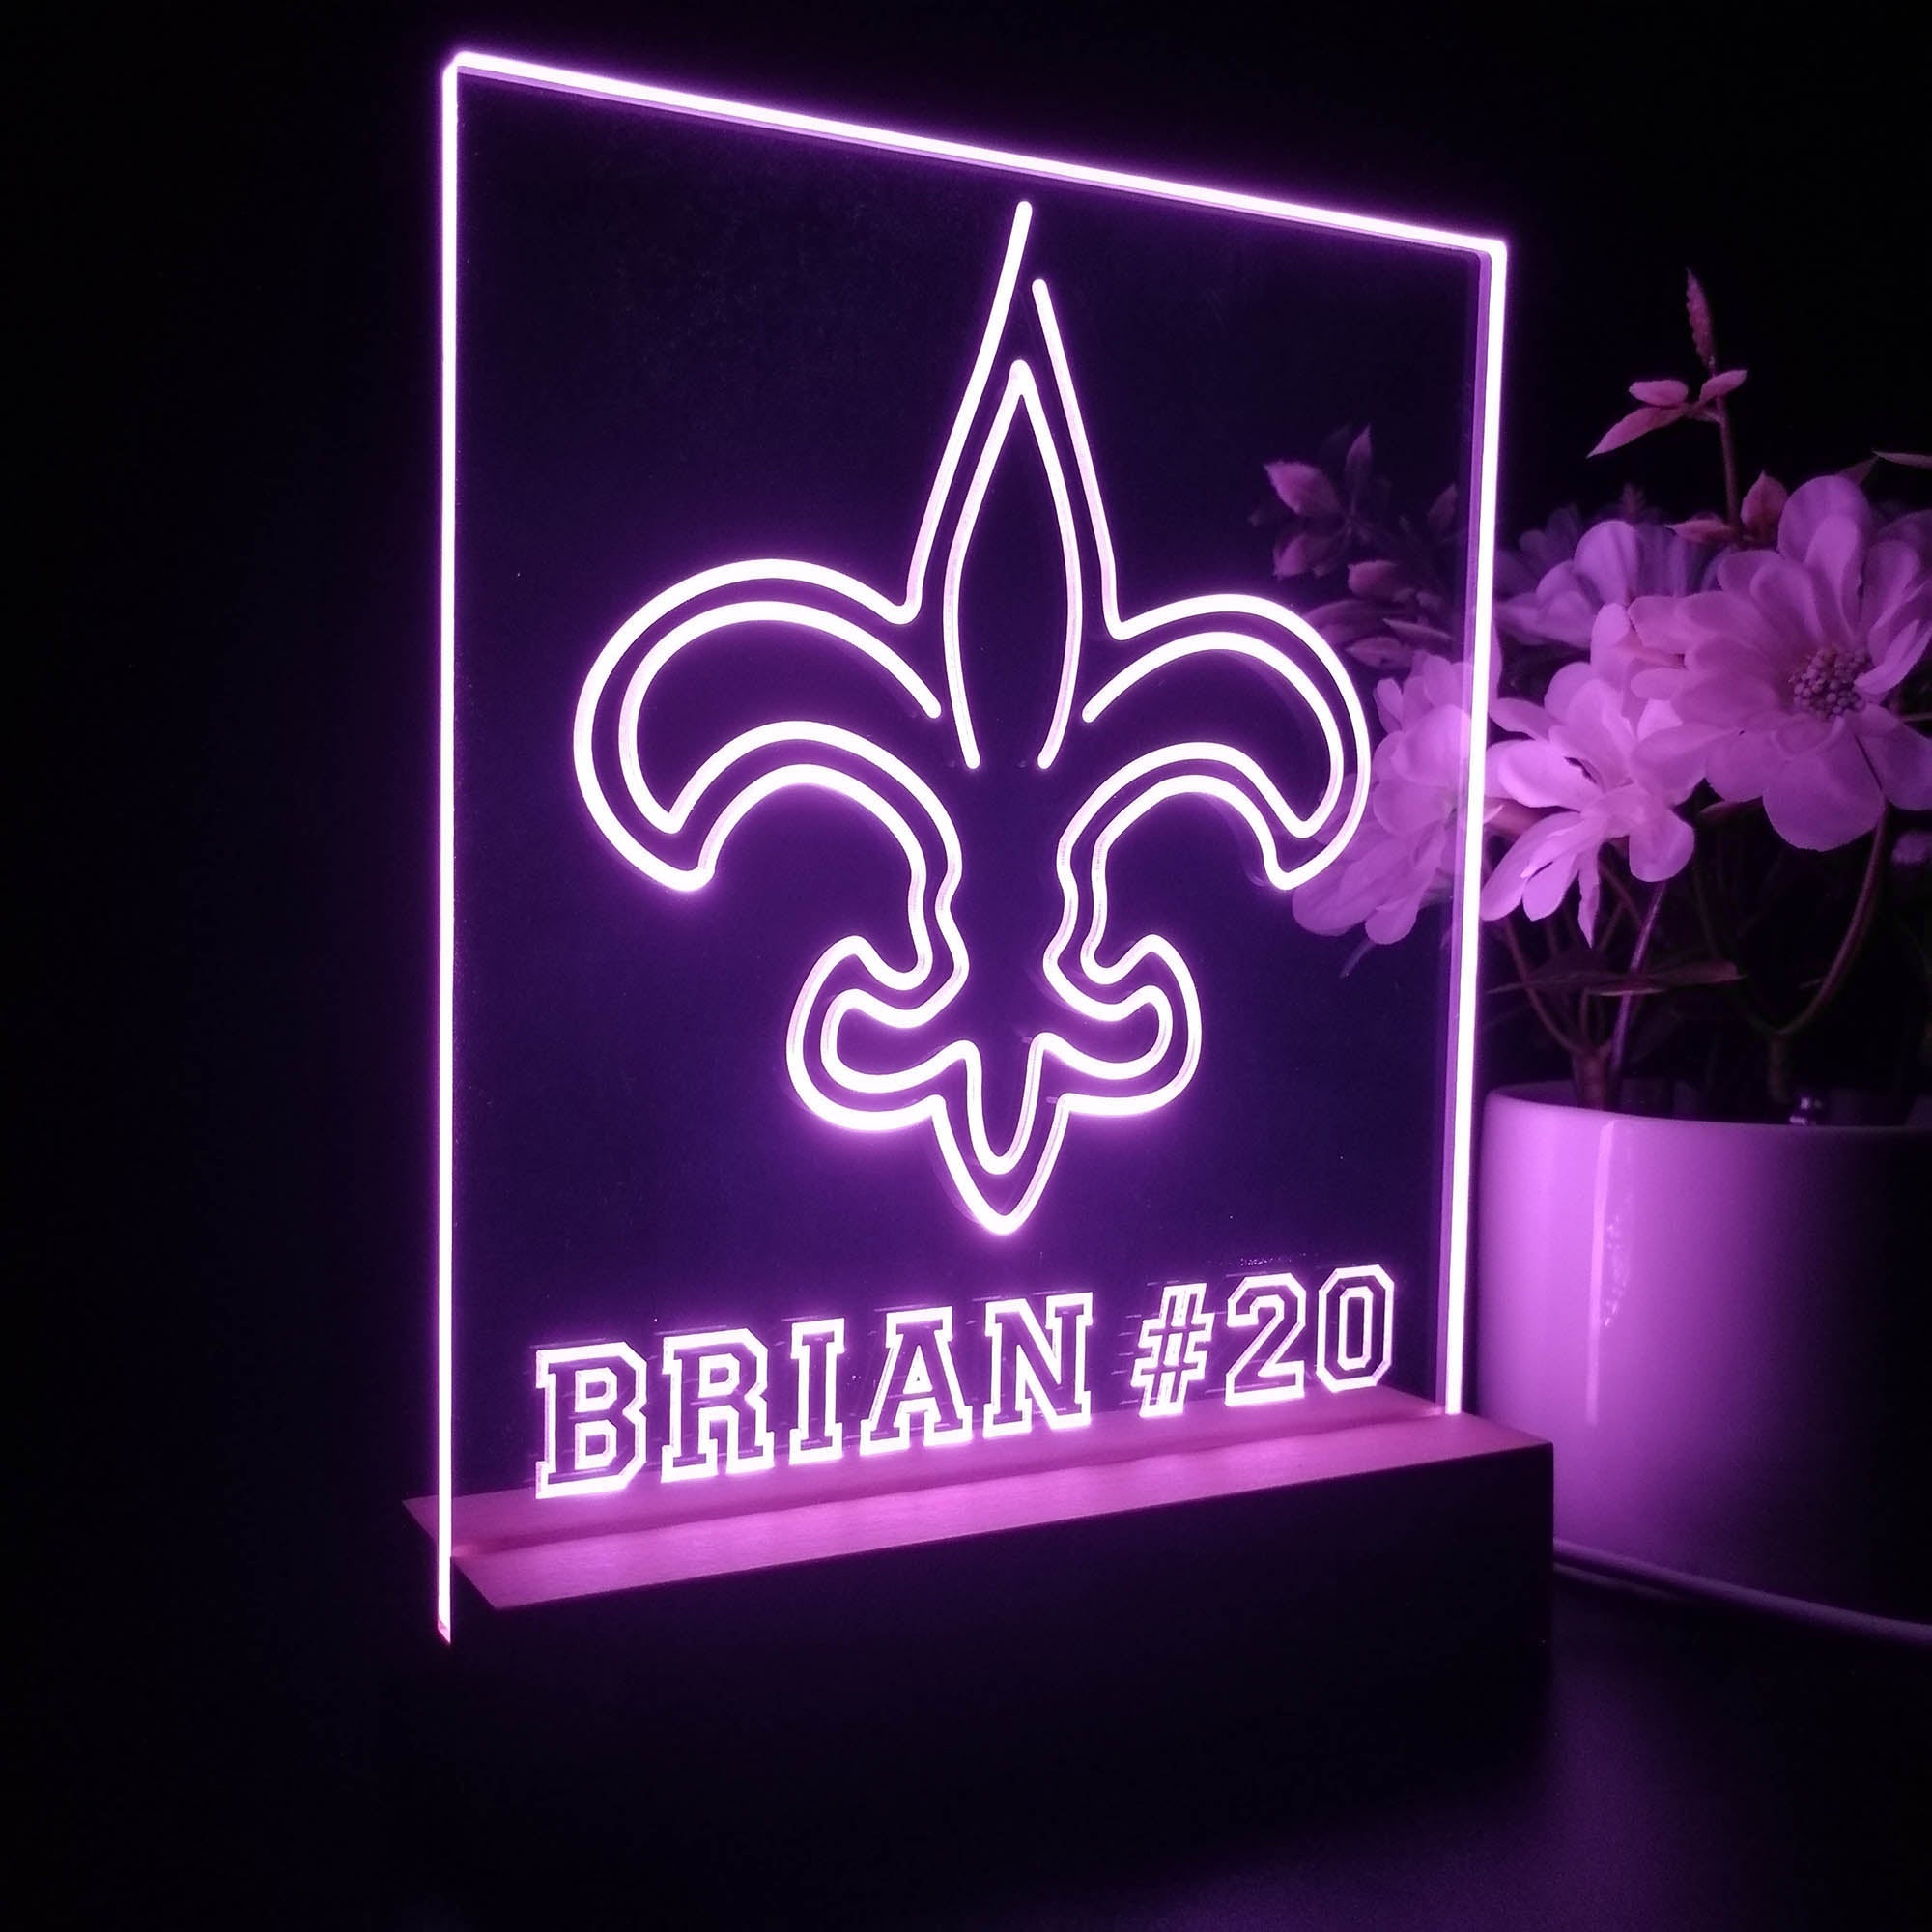 Personalized New Orleans Saints Souvenir Neon LED Night Light Sign